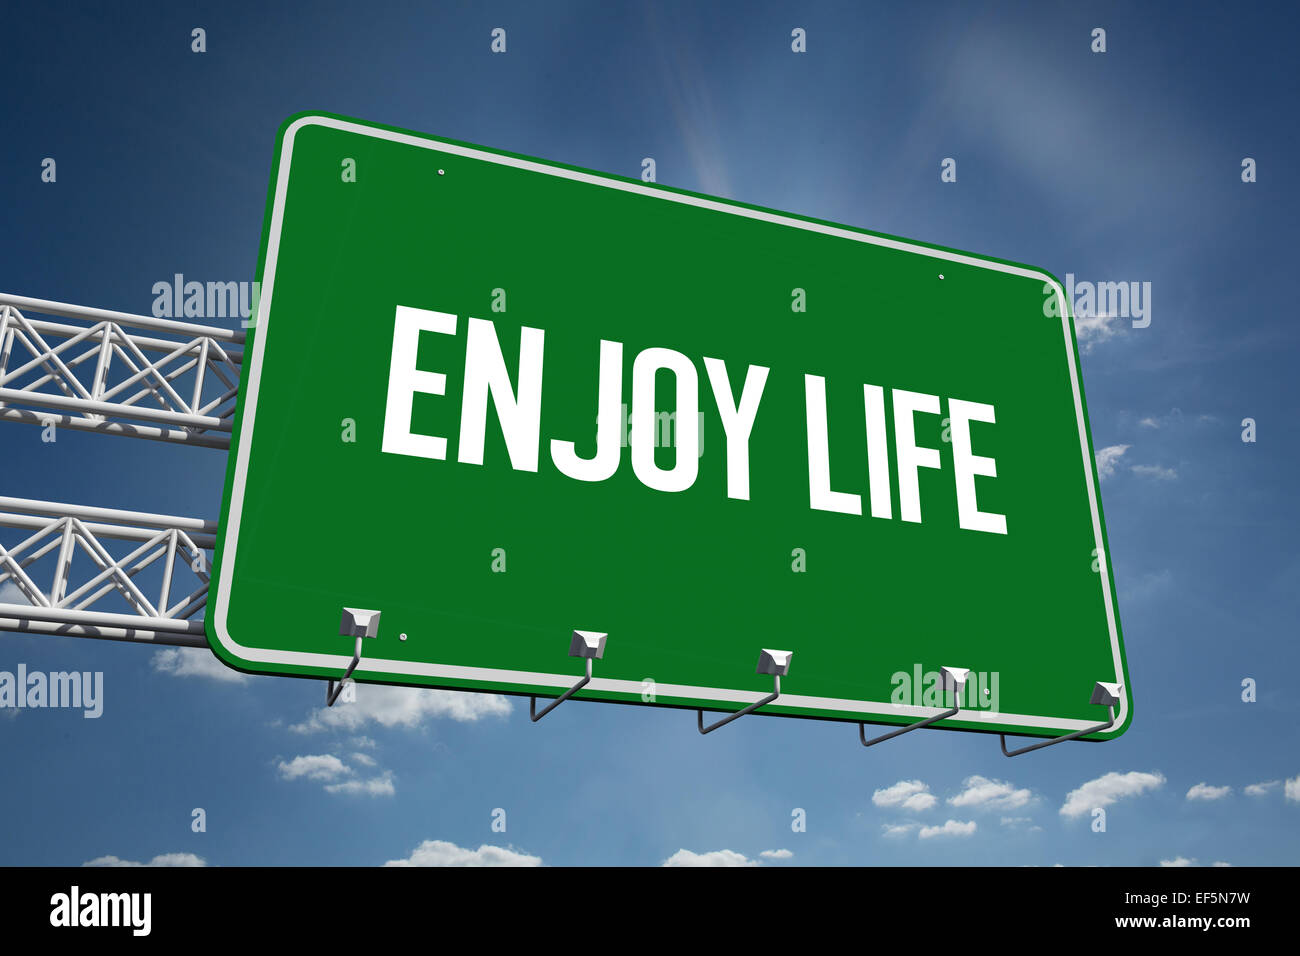 Enjoy life against cloudy sky with sunshine Stock Photo